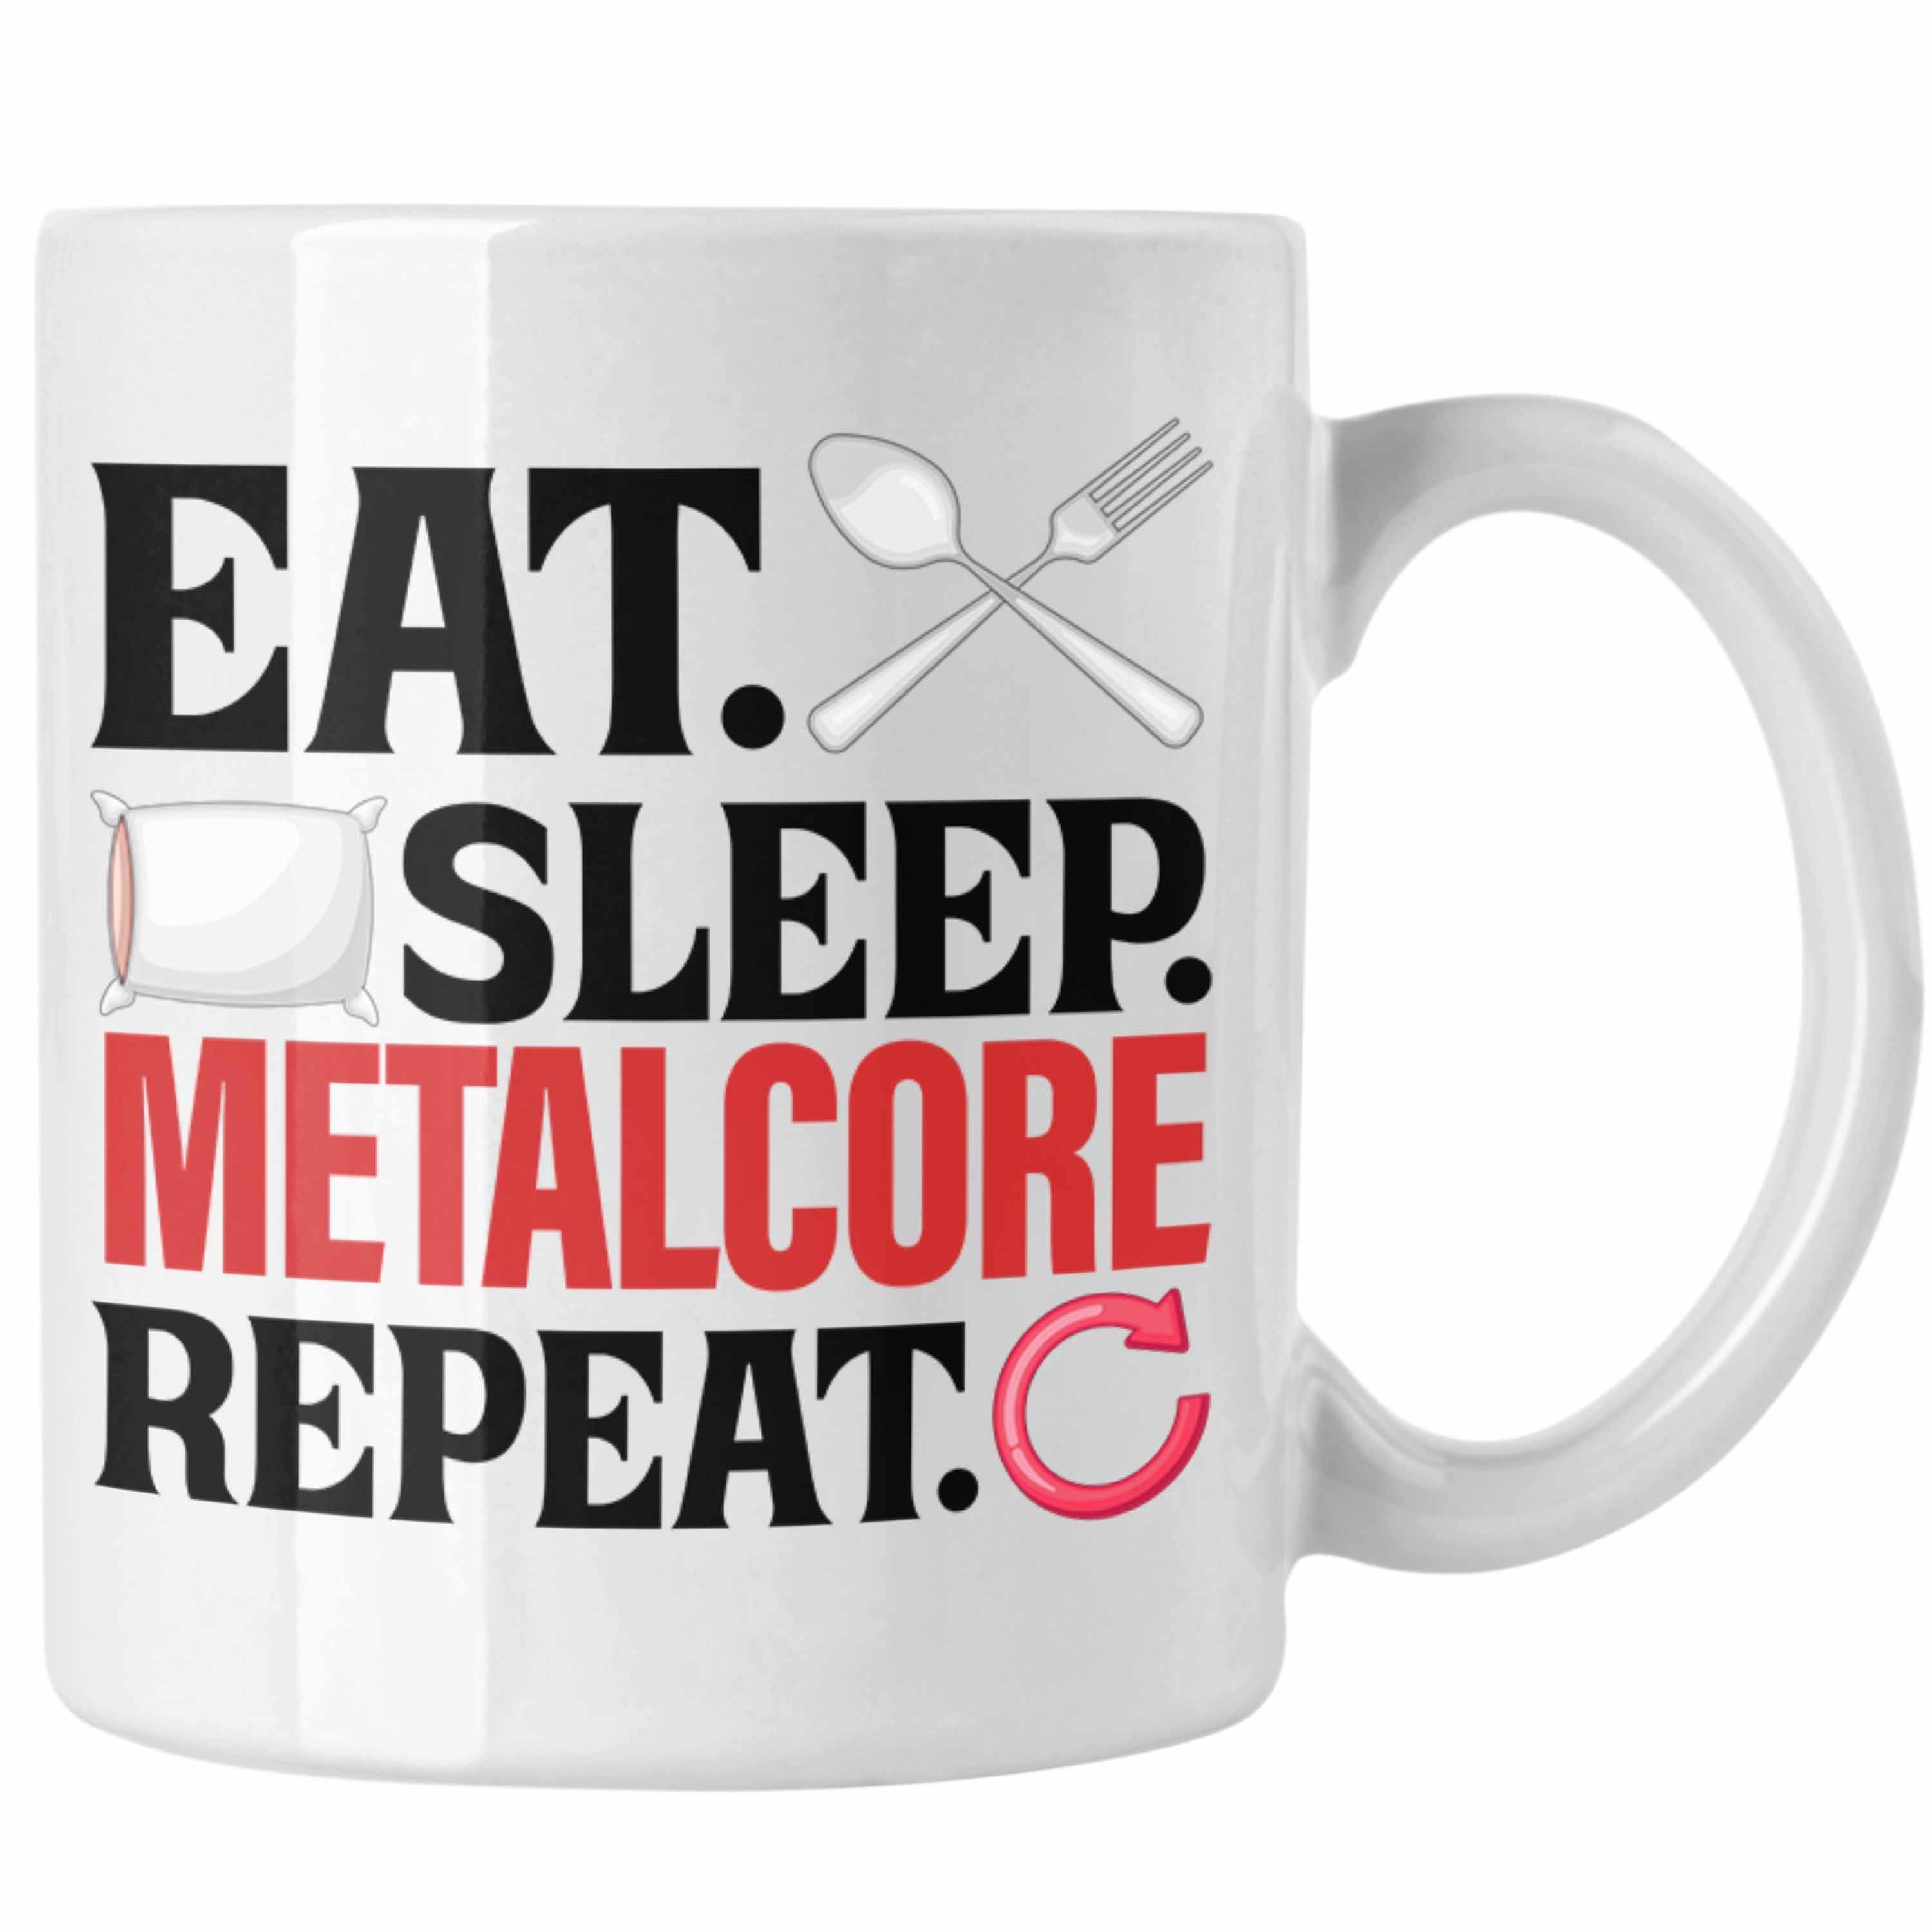 Trendation Tasse Eat Sleep Metalcore Repeat Tasse Geschenk Musik Metal Heavy Weiss